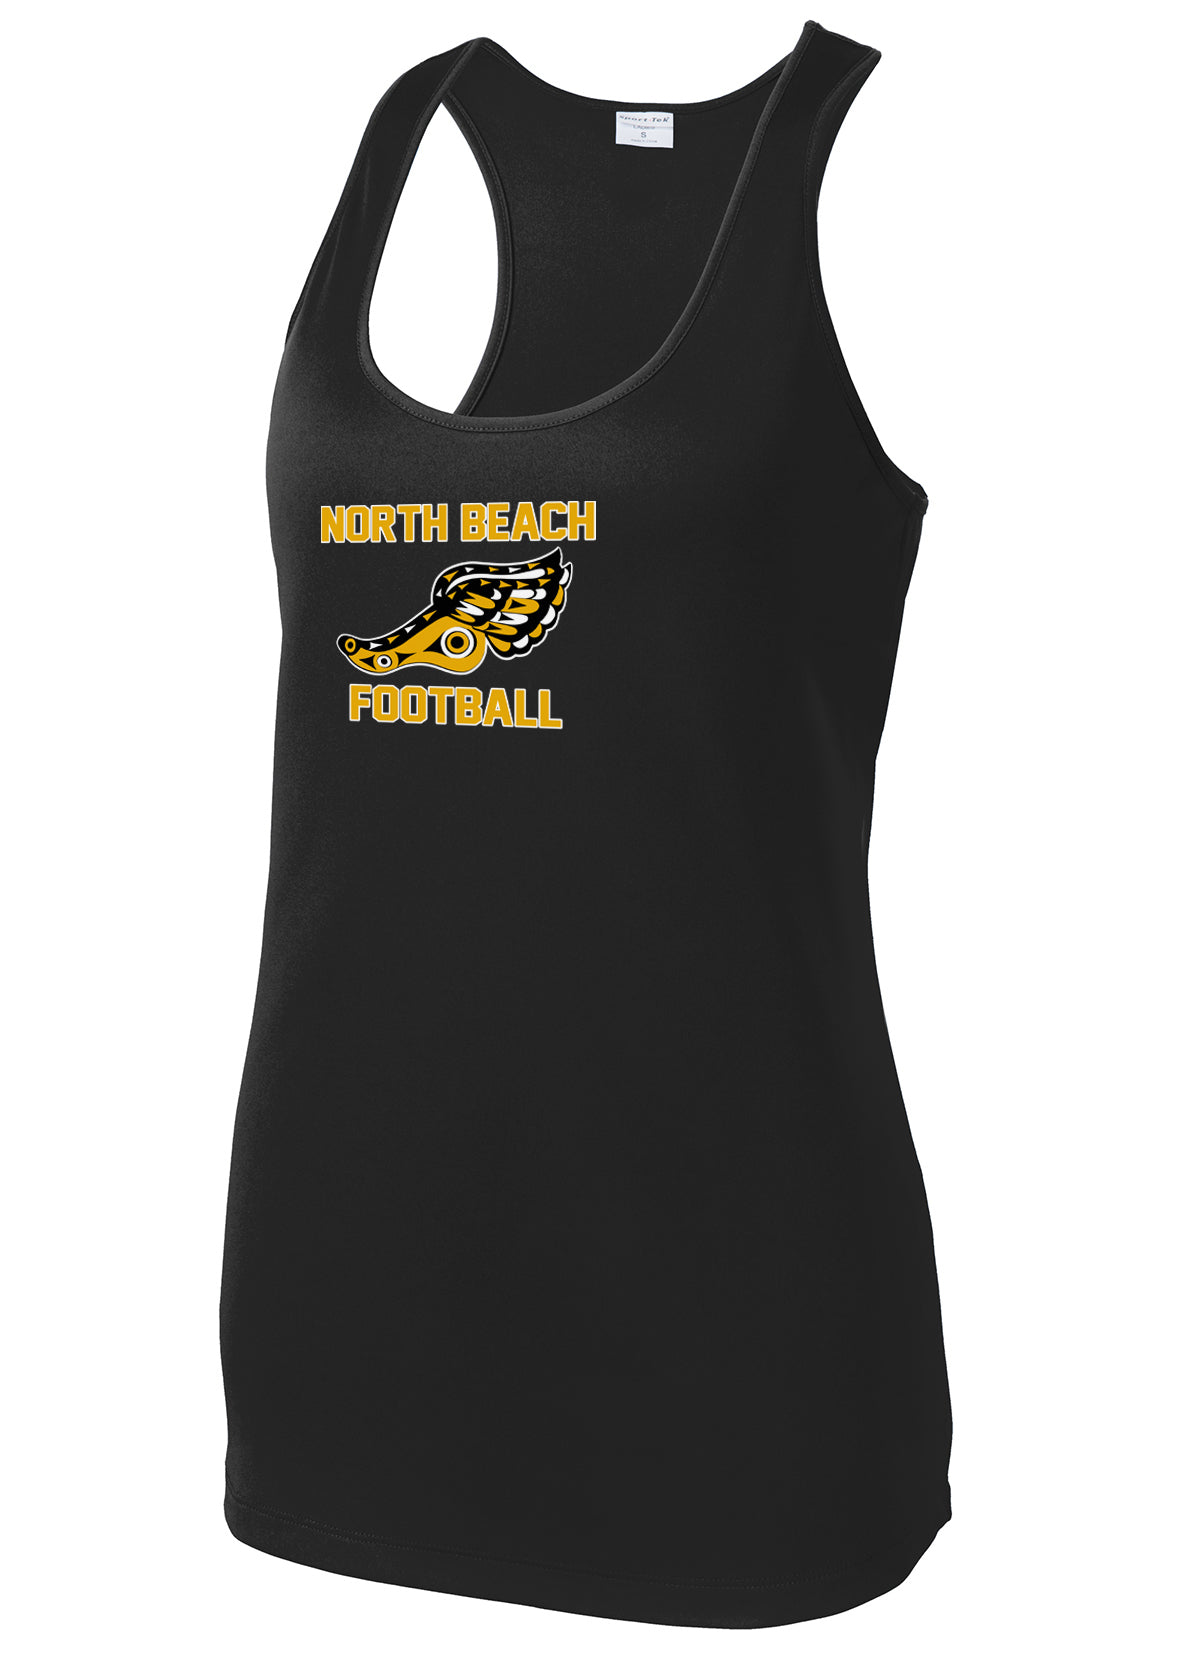 North Beach Football Women's Racerback Tank